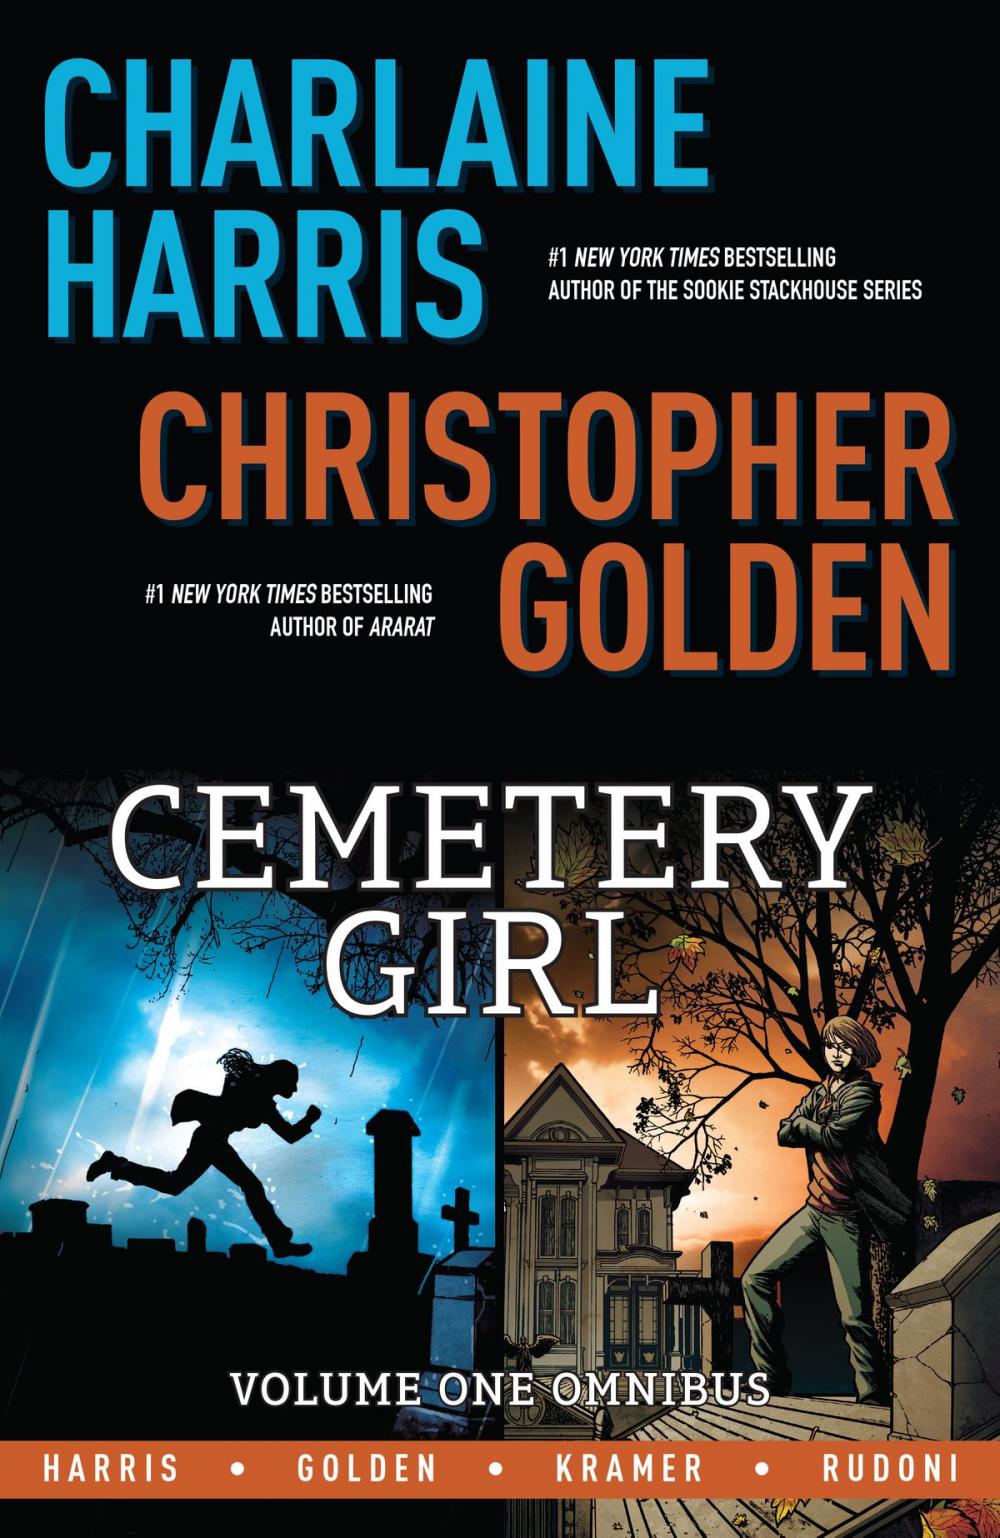 Big bigCover of Charlaine Harris' Cemetery Girl Omnibus Vol. 1